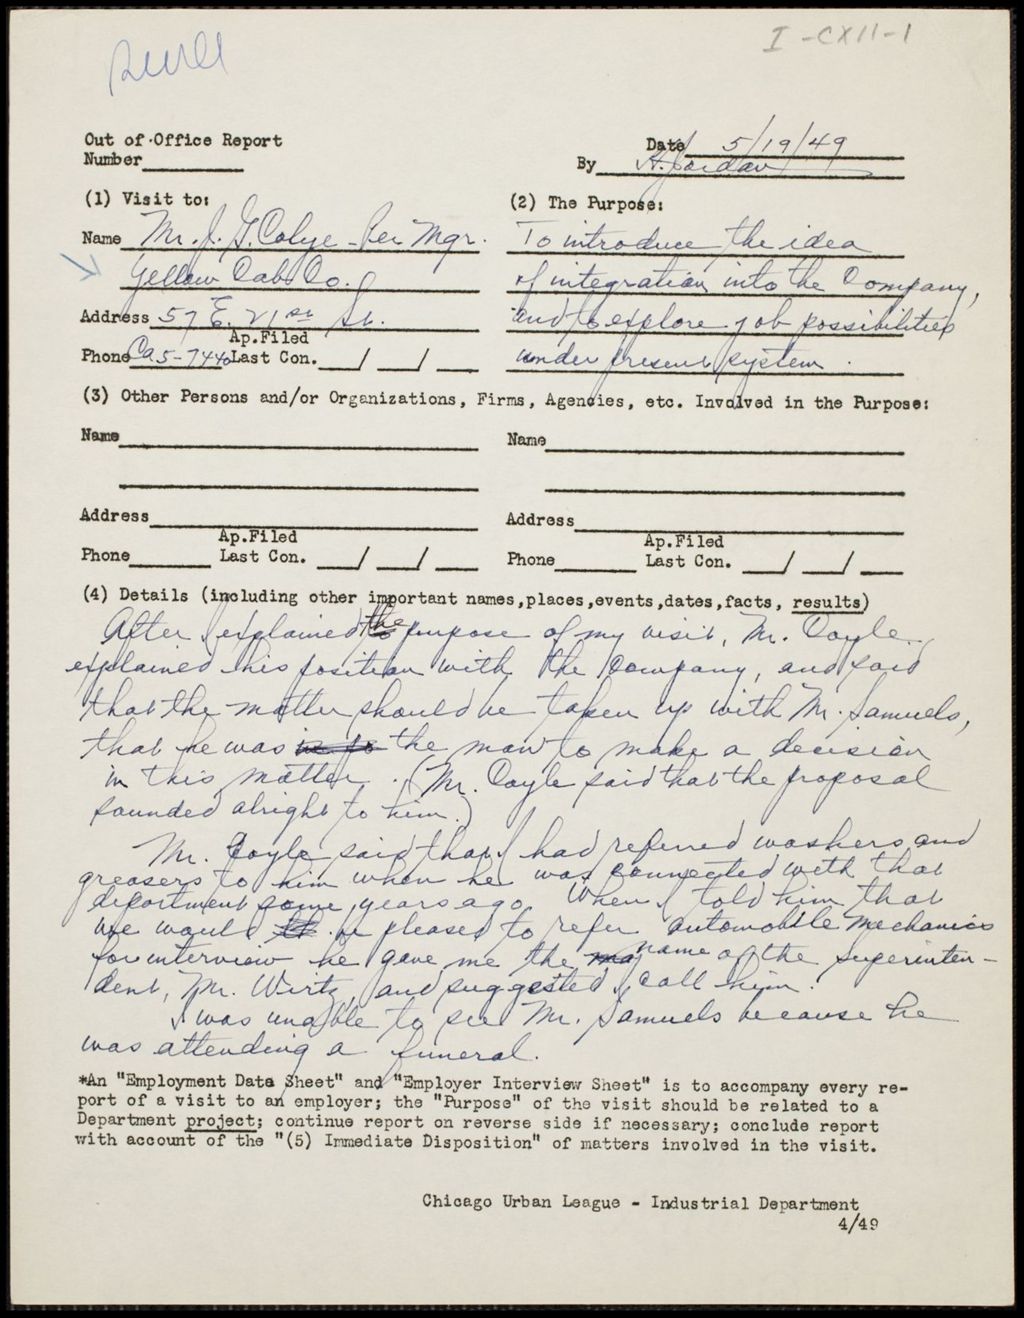 Miniature of Yellow Cab Company discriminatory practices, 1949-1952 (Folder I-2773)